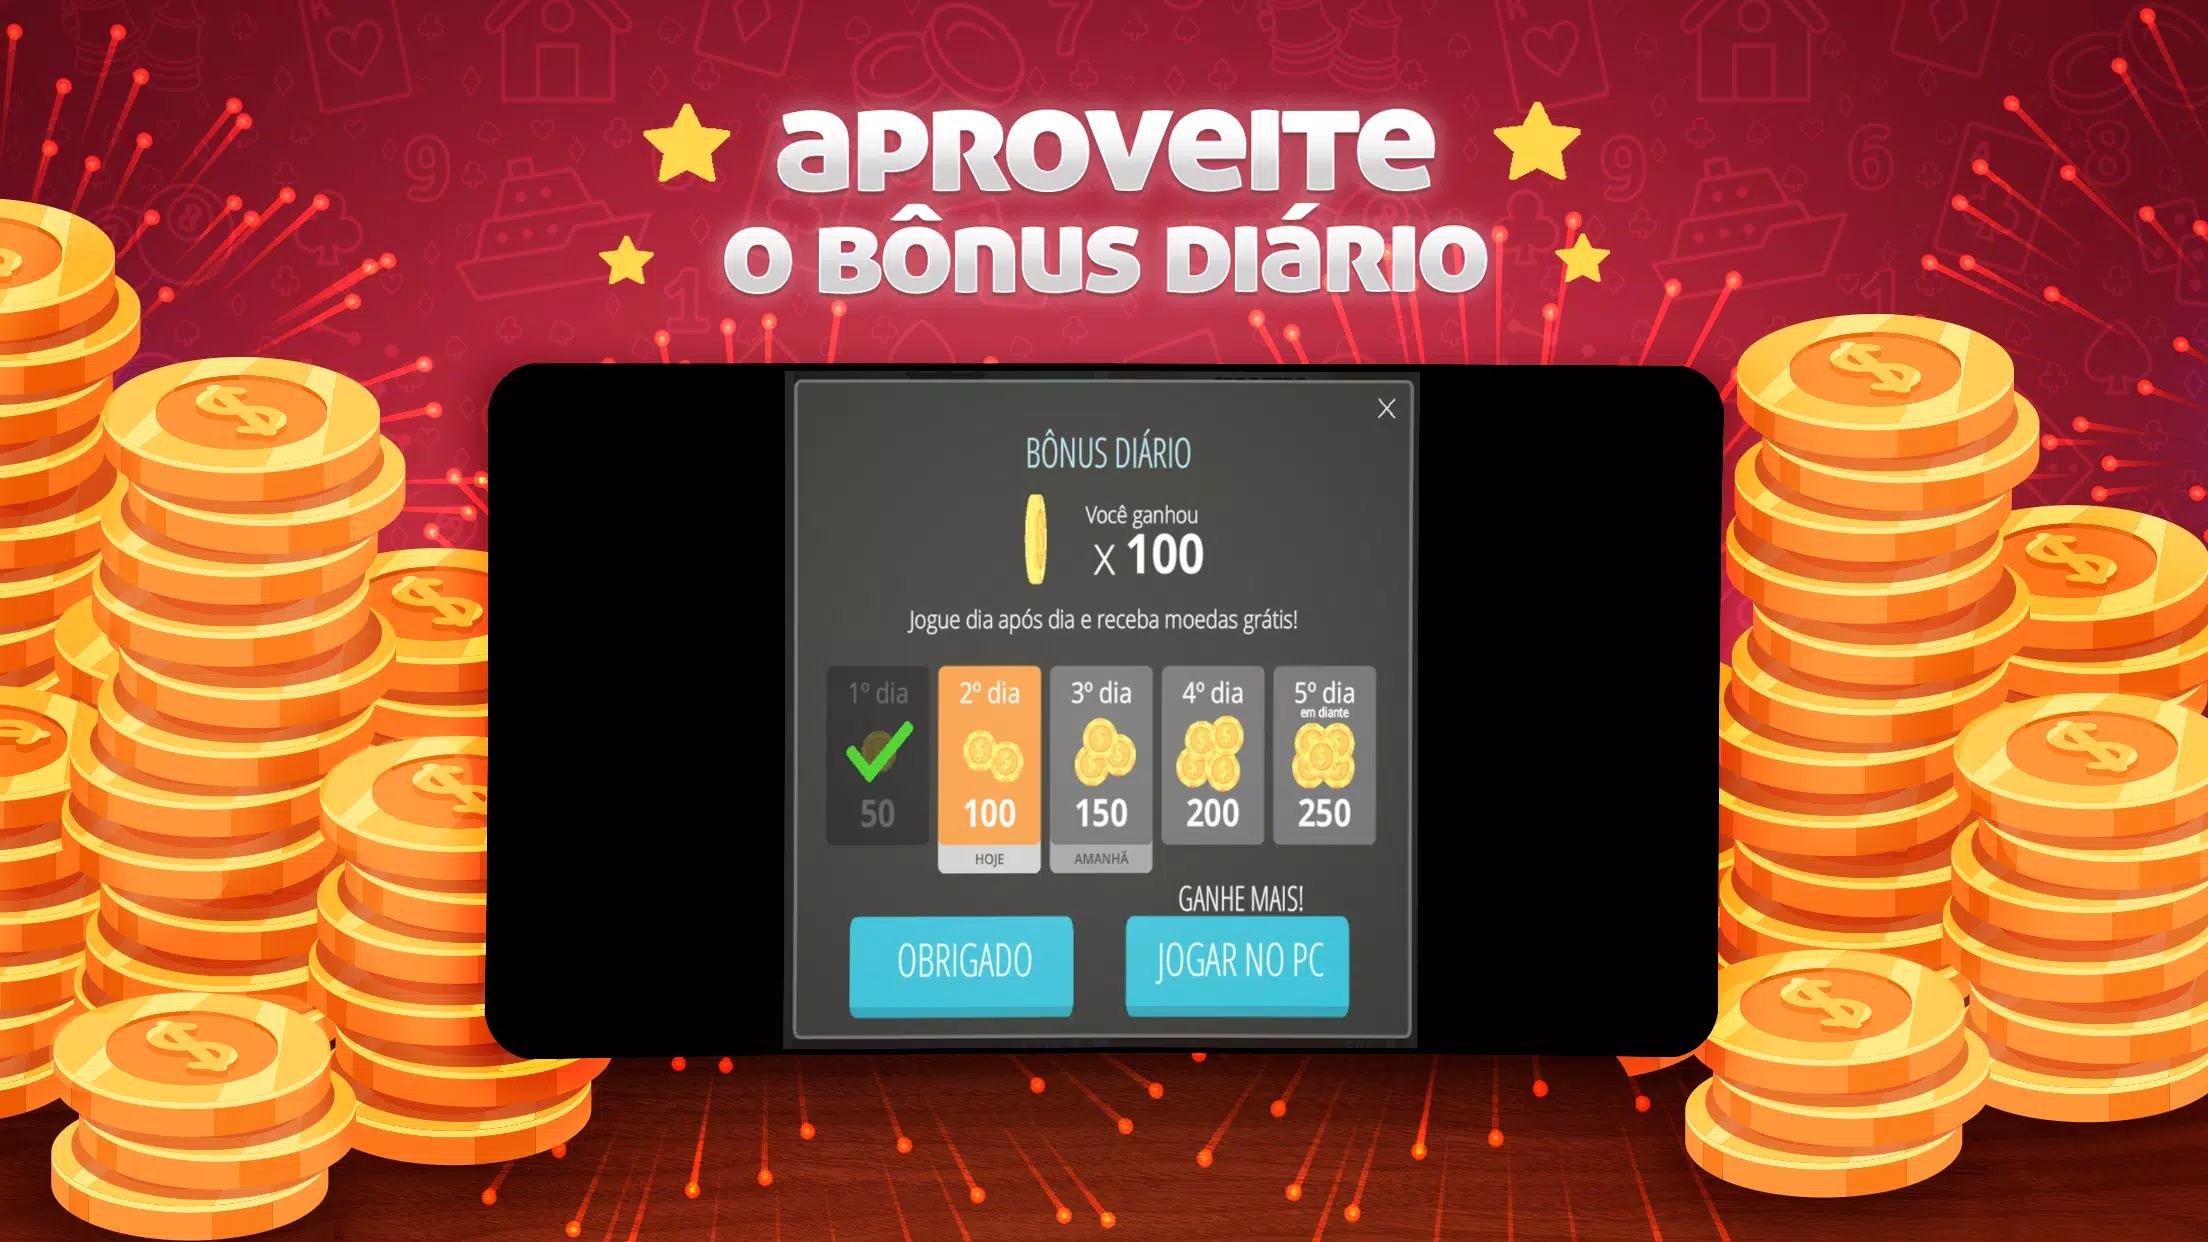 PlayOk Damas Online - Jogos Selecionados - Latest version for Android -  Download APK